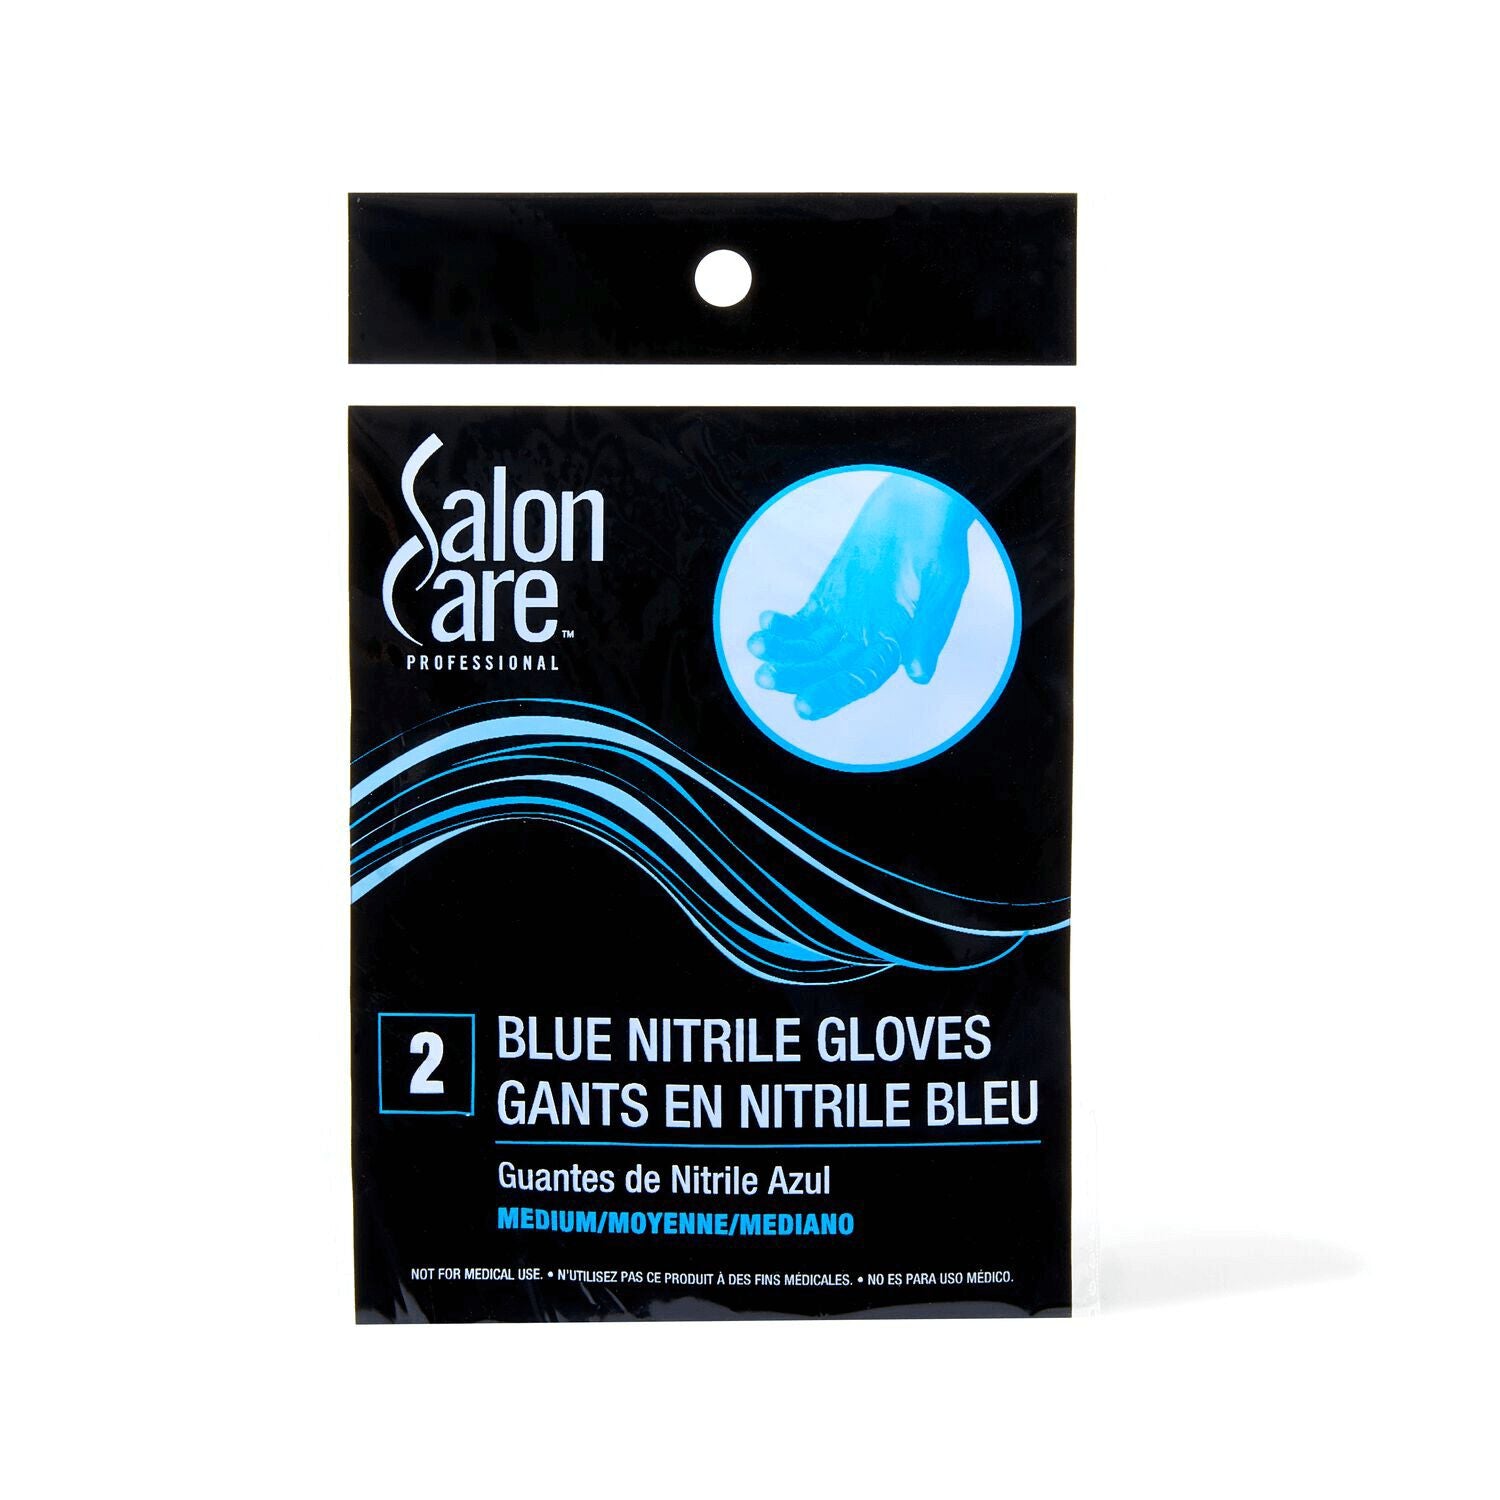 Salon Care 2ct Blue Nitrile Powder-Free Gloves